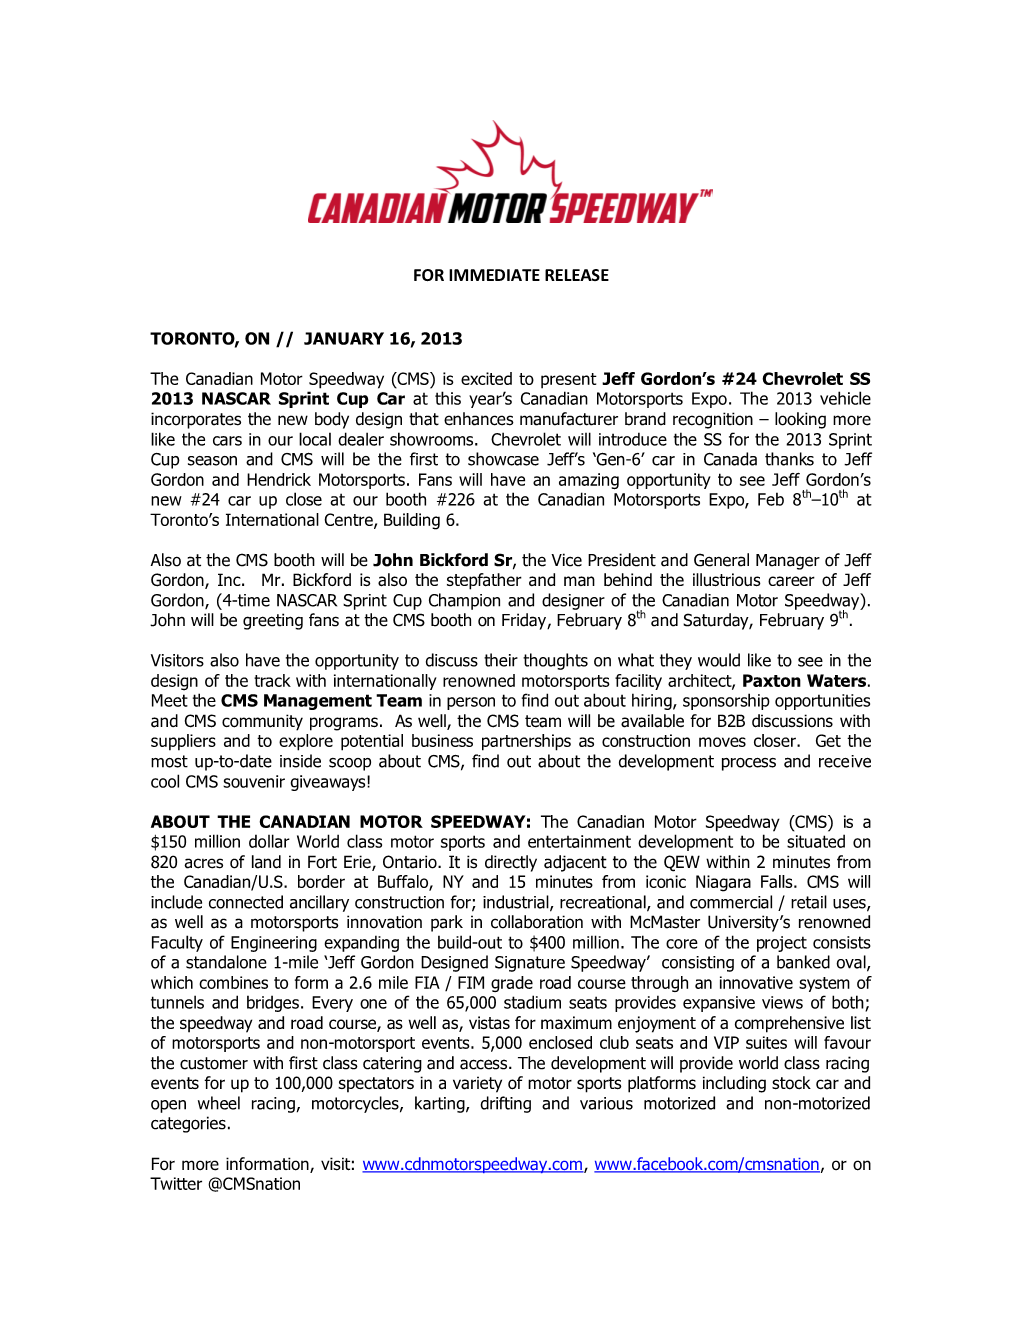 Canadian Motor Speedway Presents Jeff Gordon's #24 Chevrolet SS